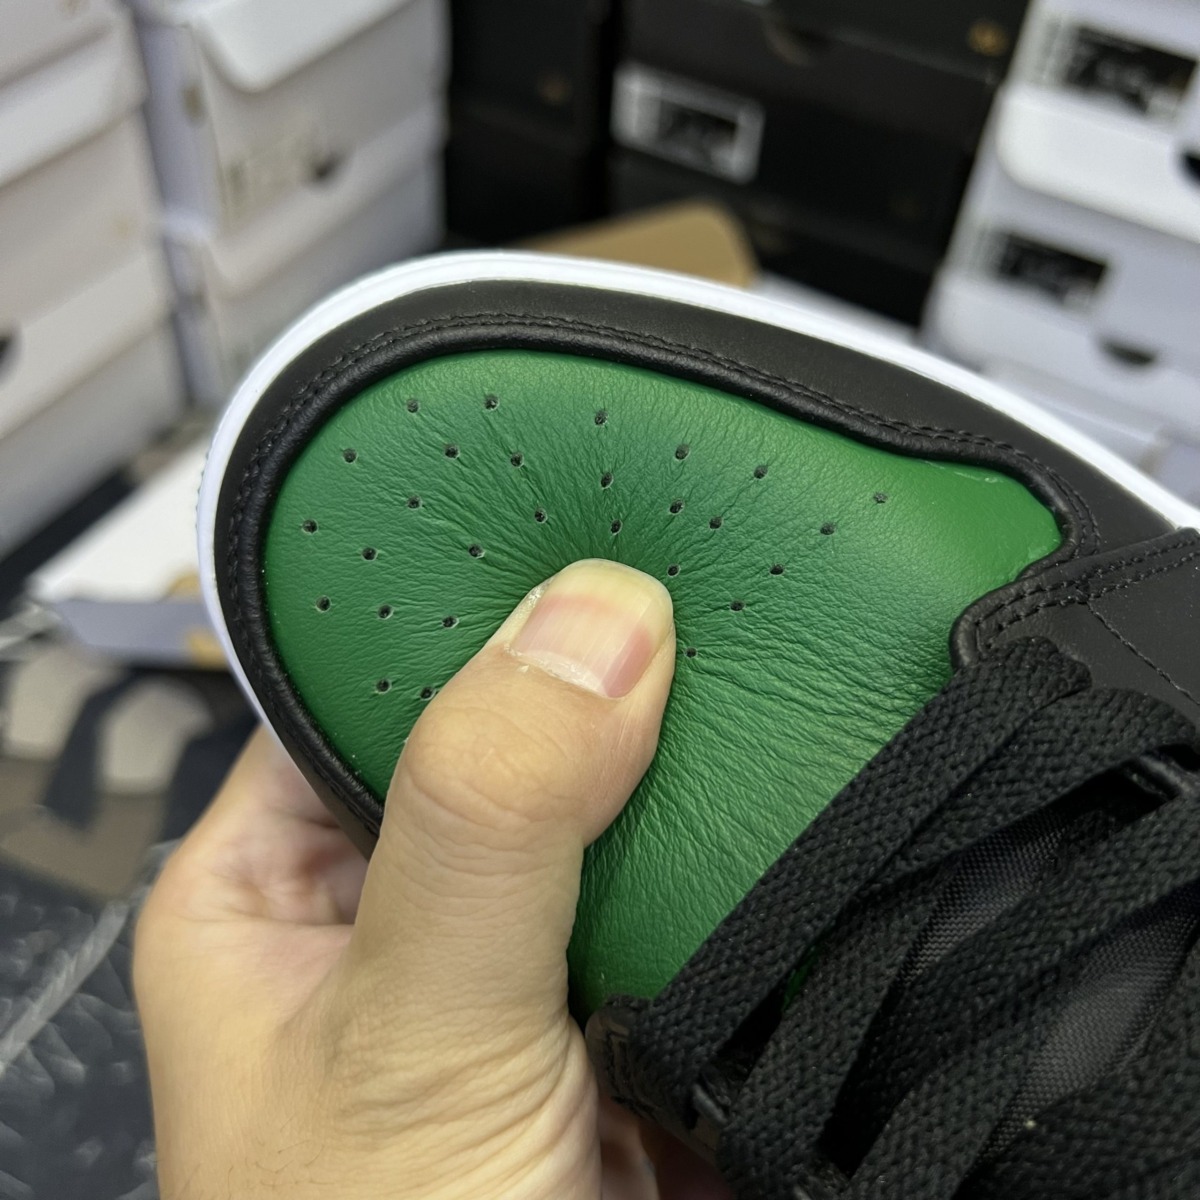 Giày Air Jordan 1 Low GS ‘Green Toe’